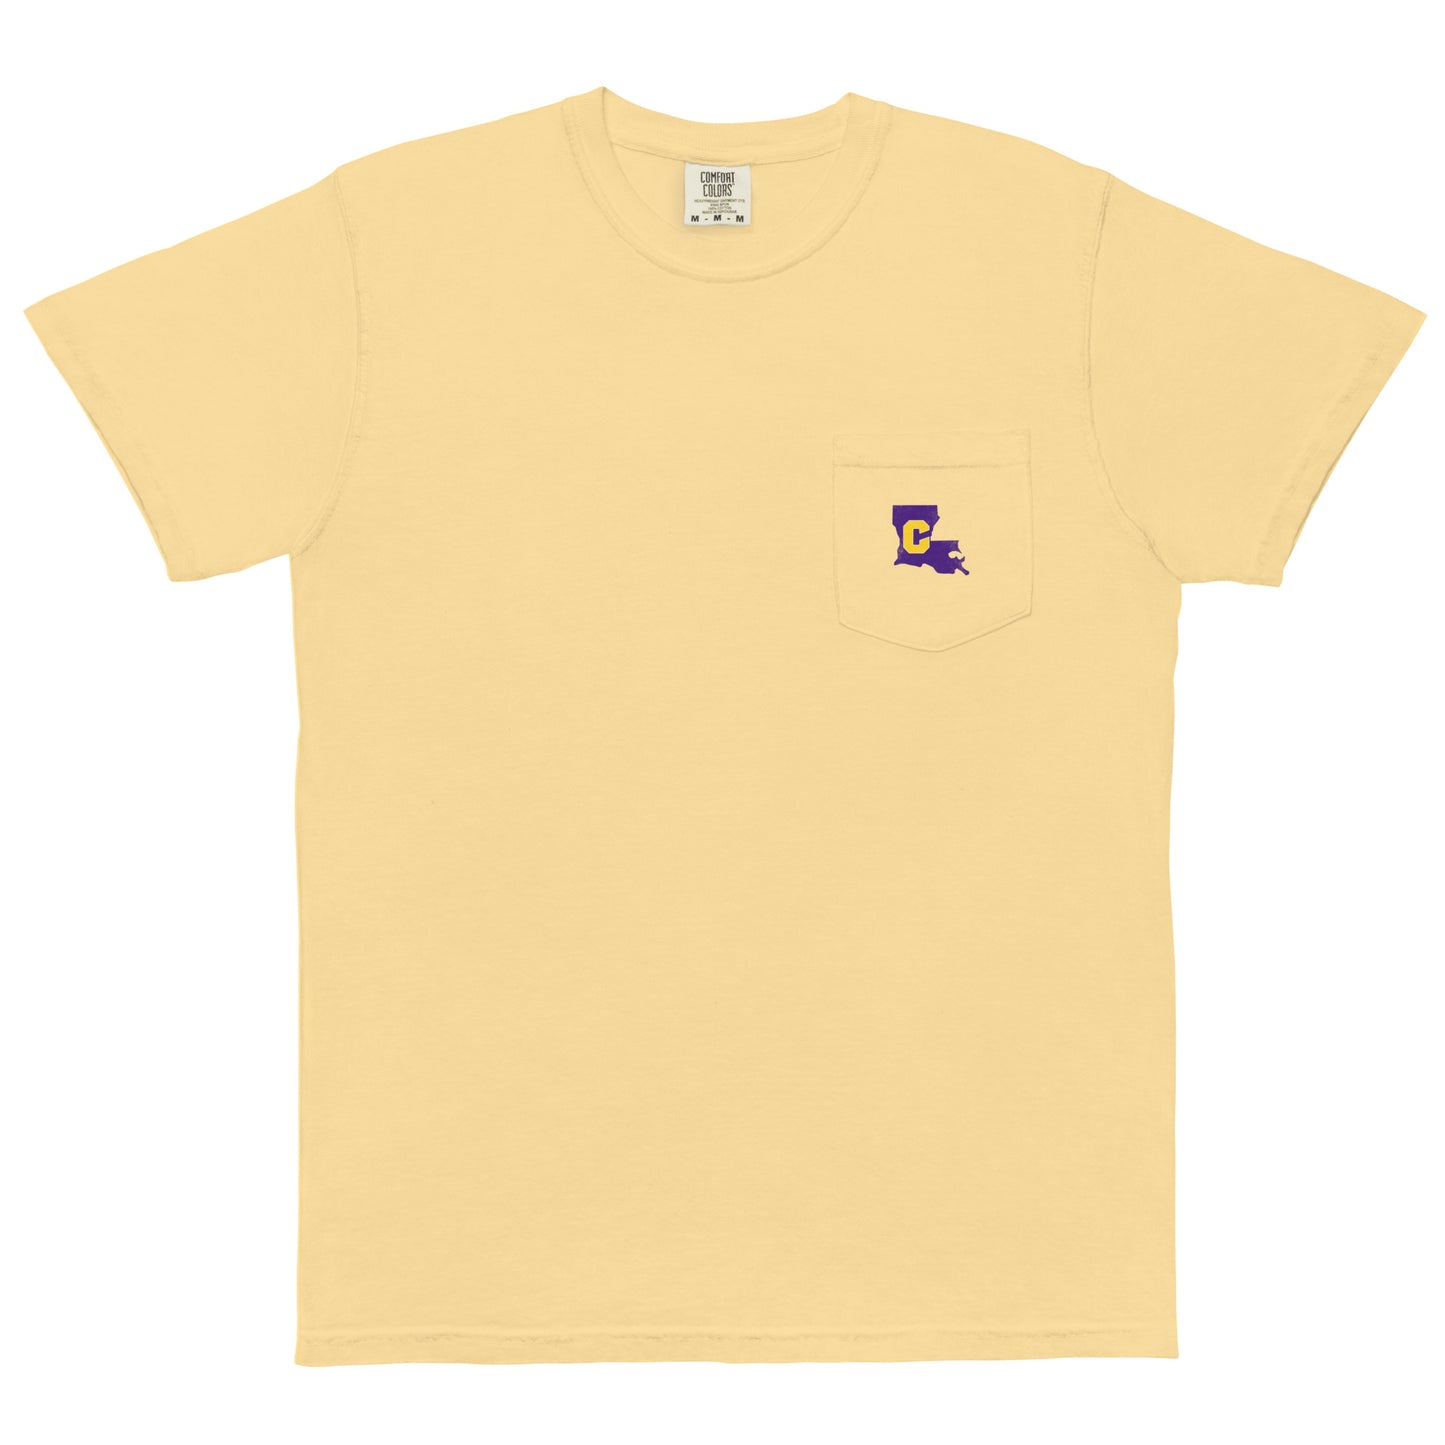 The Dream Team Unisex garment-dyed pocket t-shirt